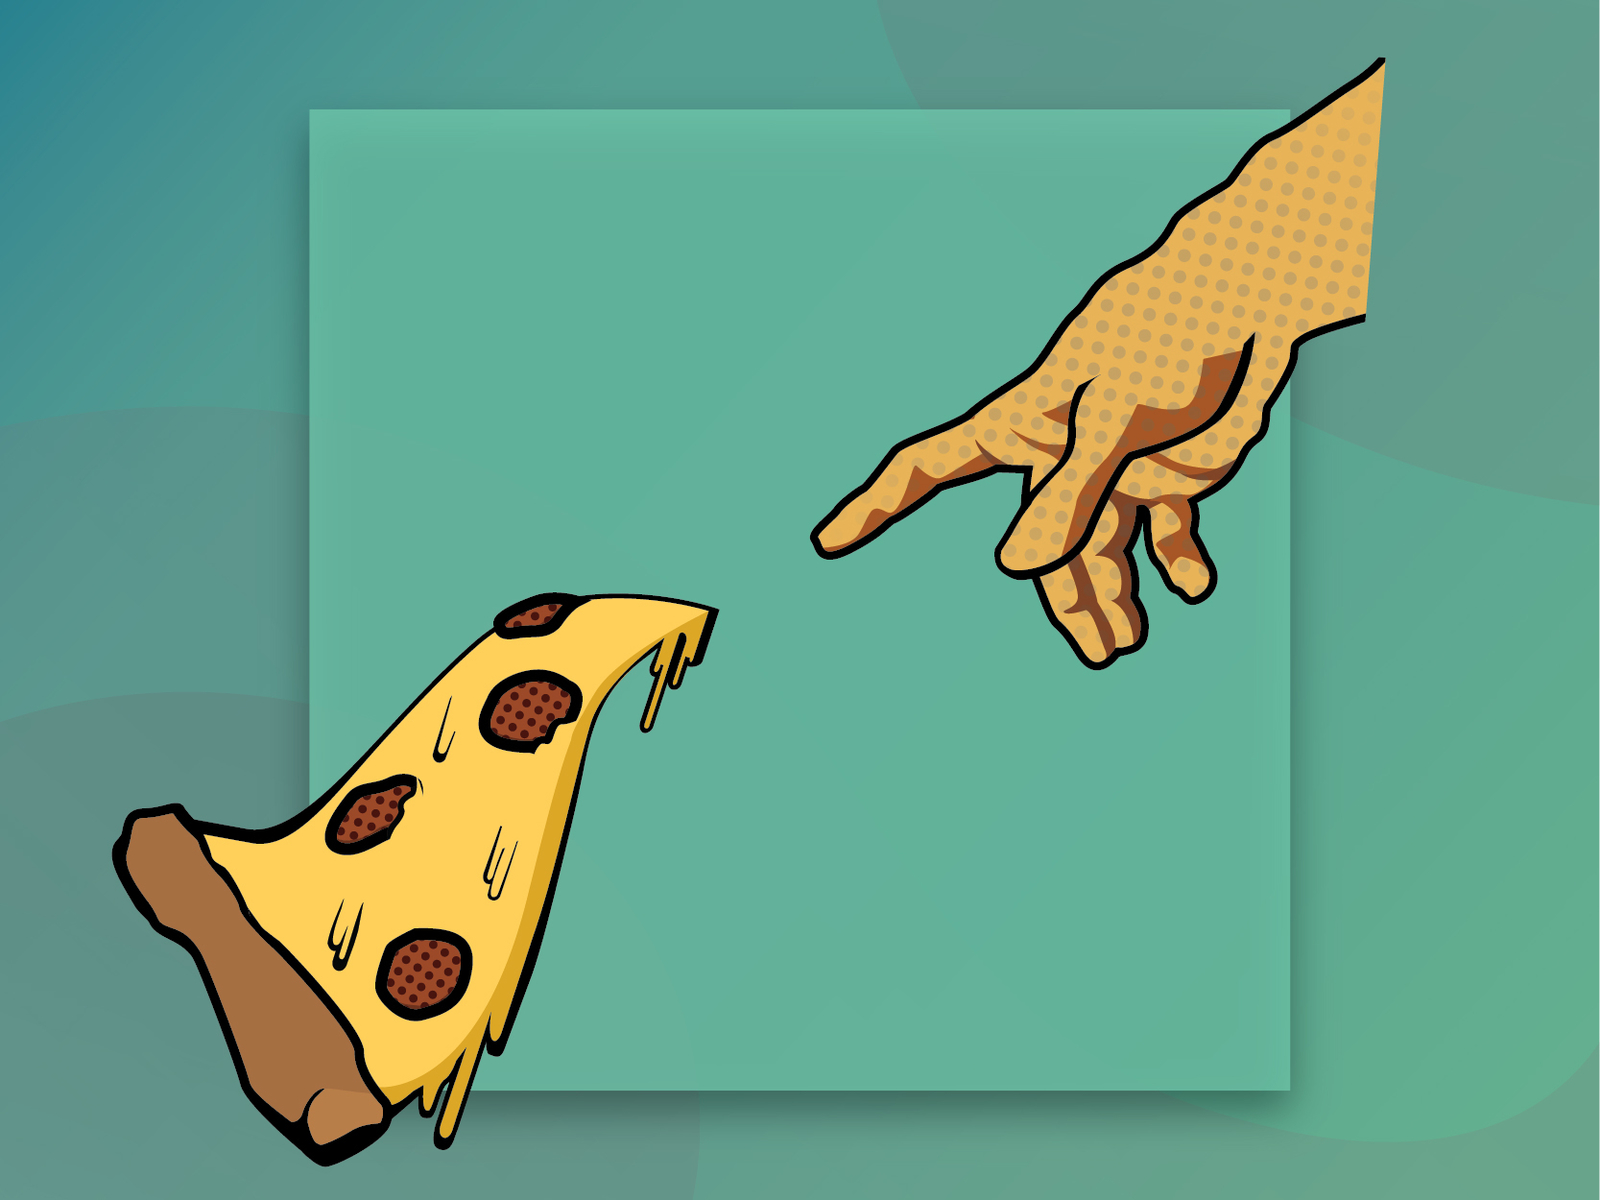 Acquiesce gnier Kollega pop art & pizza by Natasha DeCoste on Dribbble